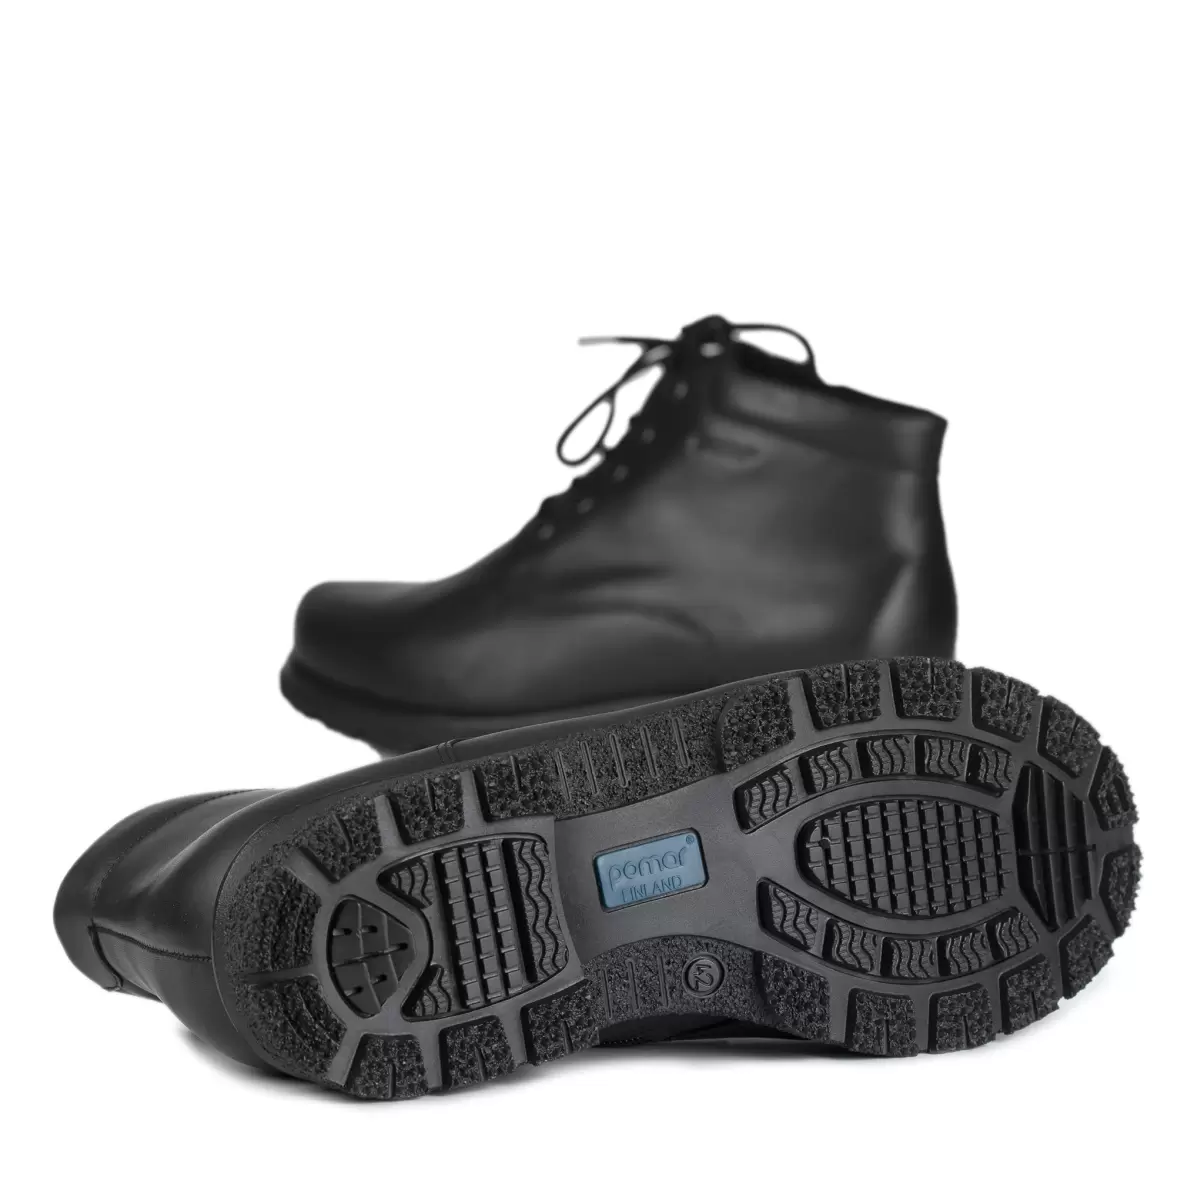 Nietos Men's Xw Ankle Boot Blacknappa/Felt Lin/Black So Men Ankle Boots Pomarfin Oy - 4